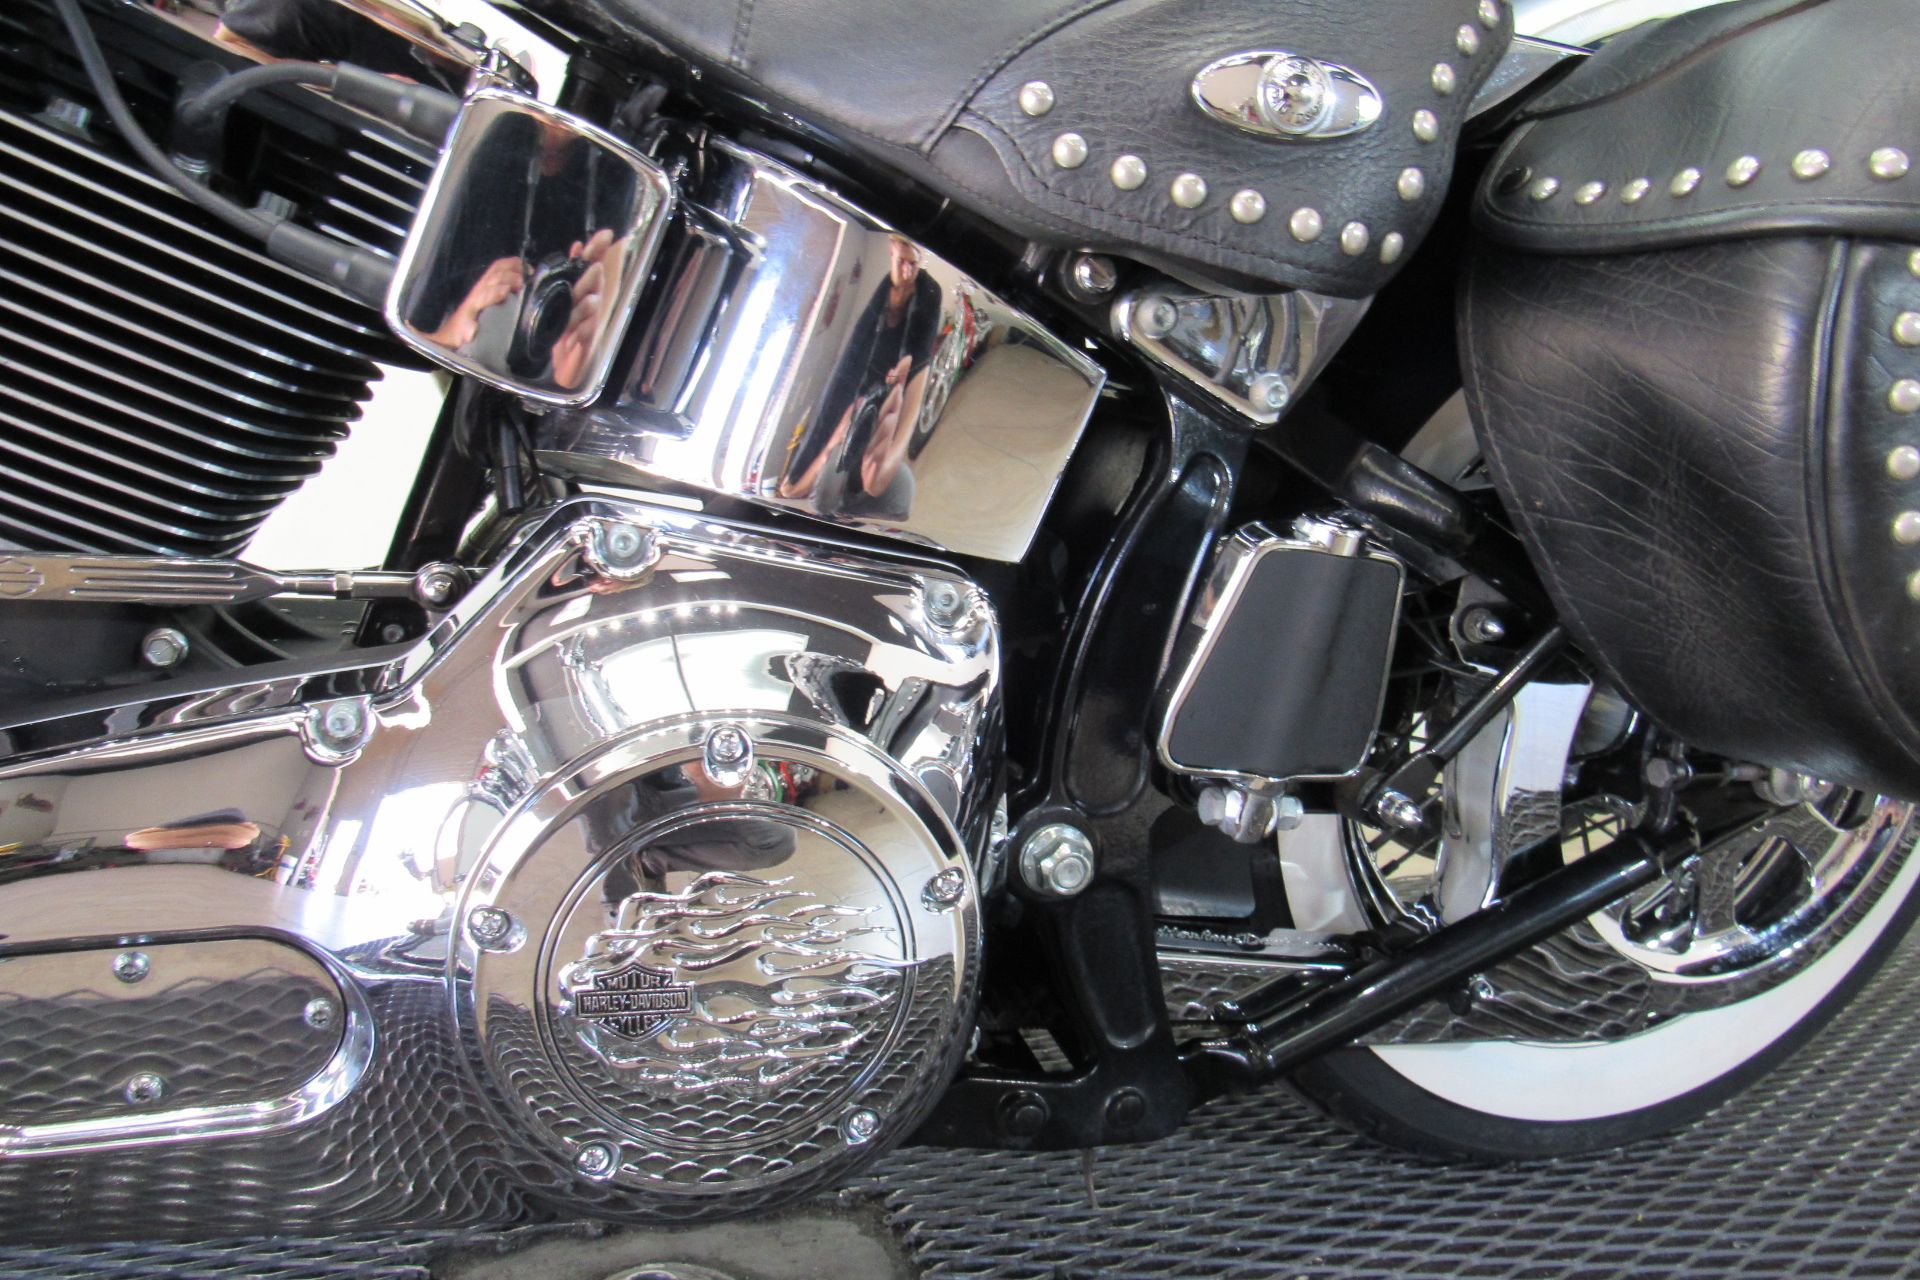 2003 Harley-Davidson Heritage Anniversary in Temecula, California - Photo 31